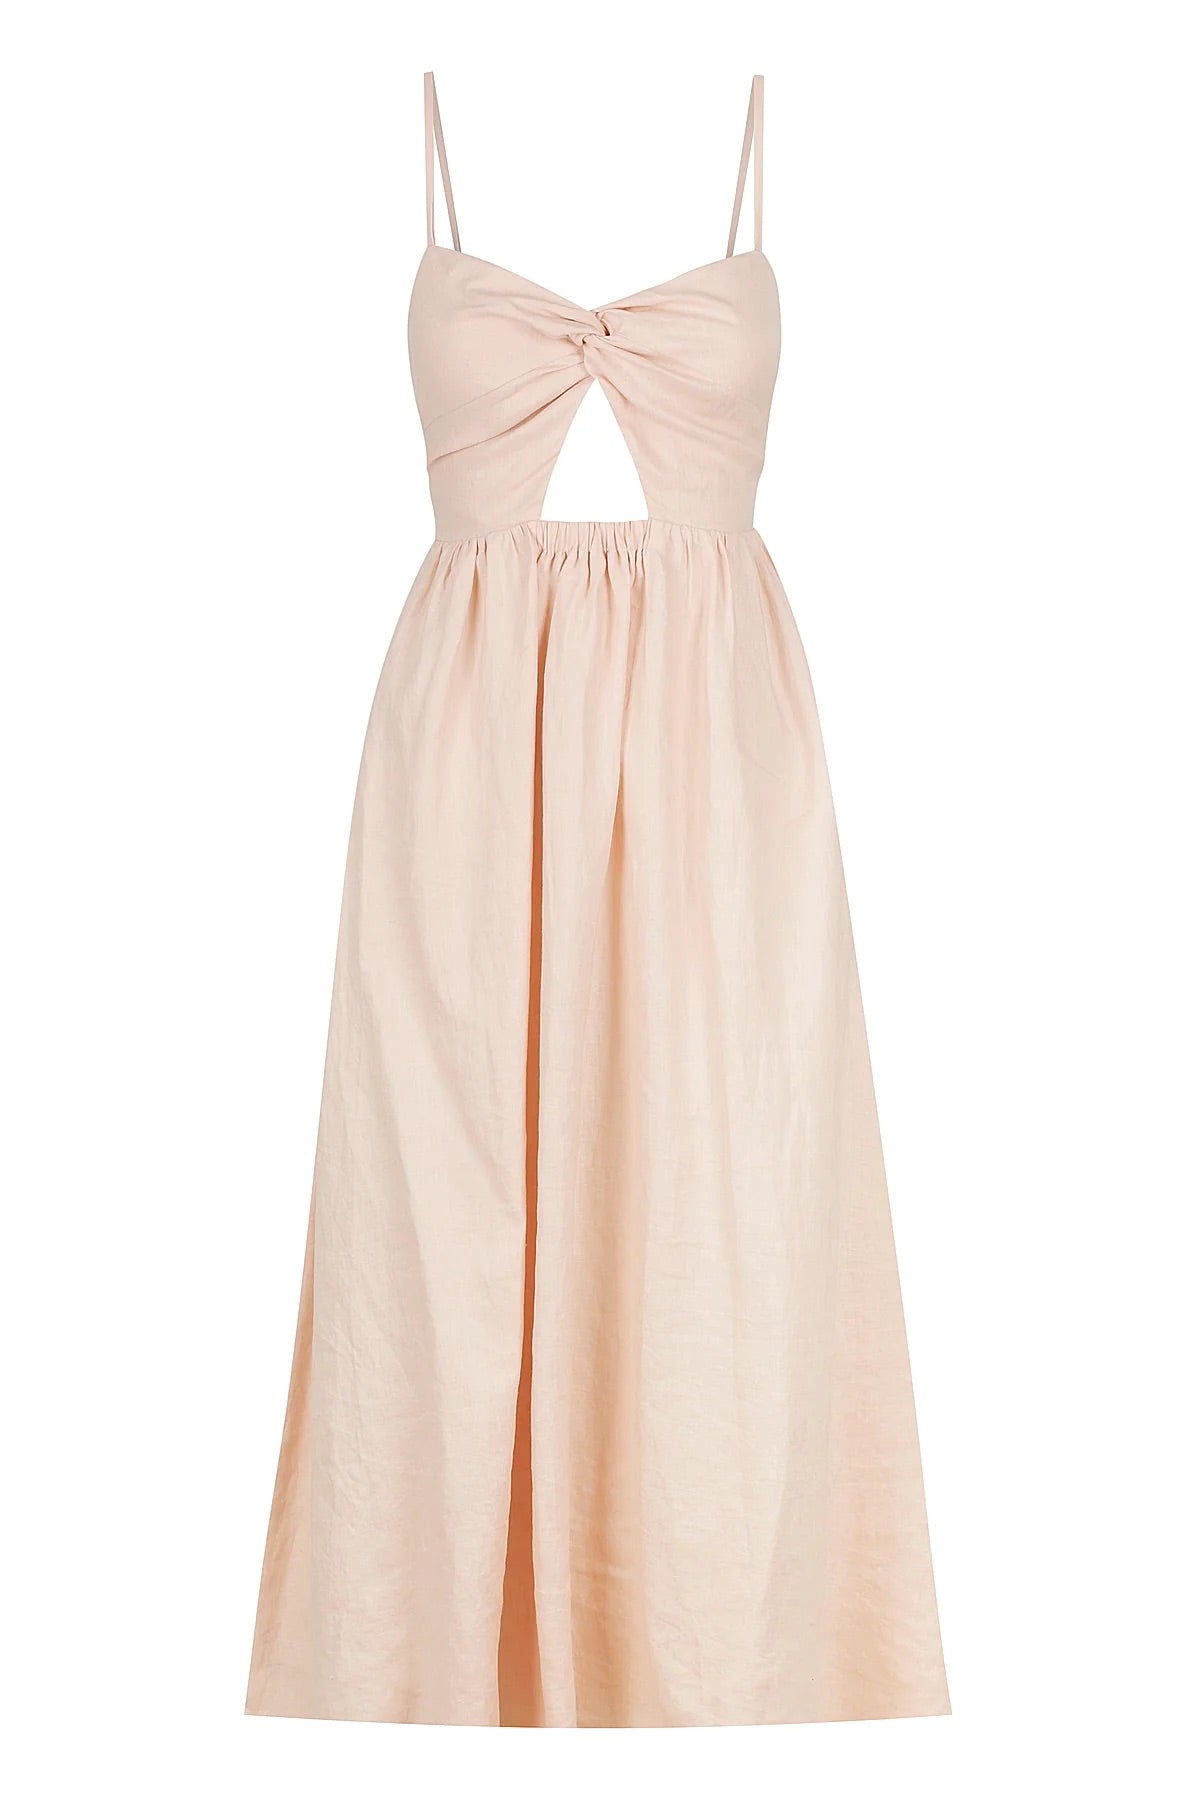 blush linen sun dress, ethical fashion